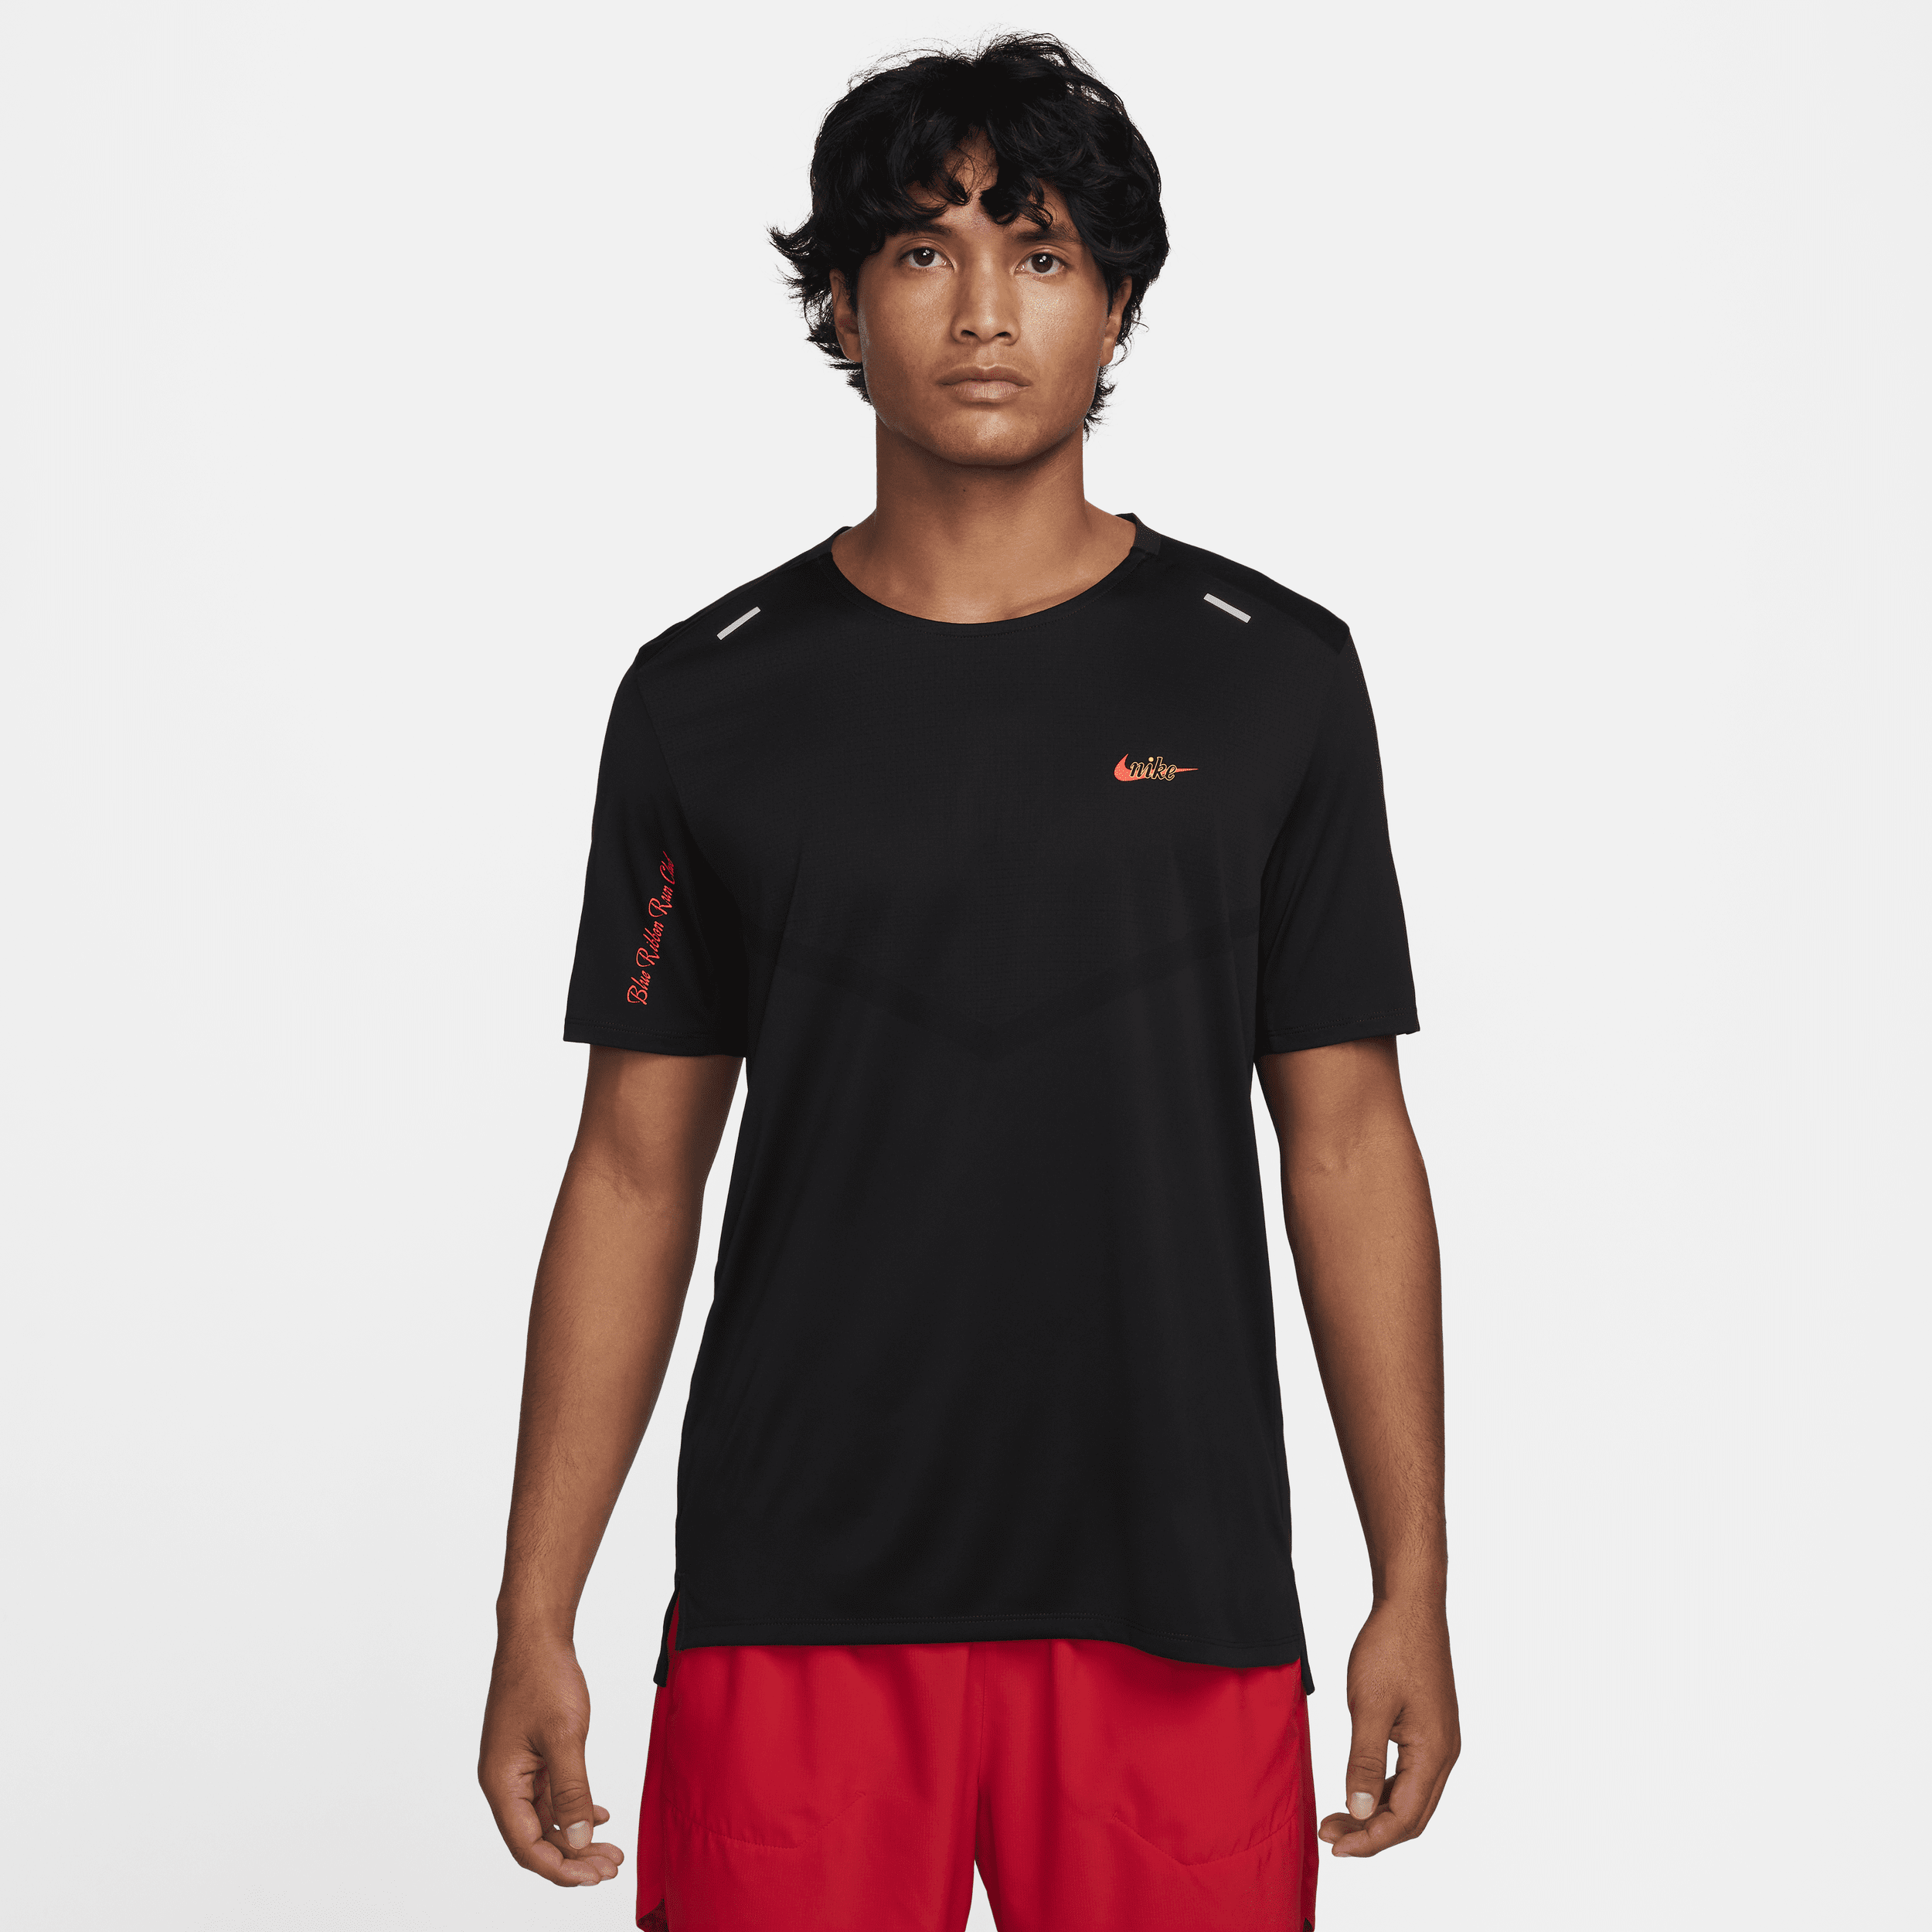 Nike Men's Rise 365 Dri-fit Short-sleeve Running Top In Black